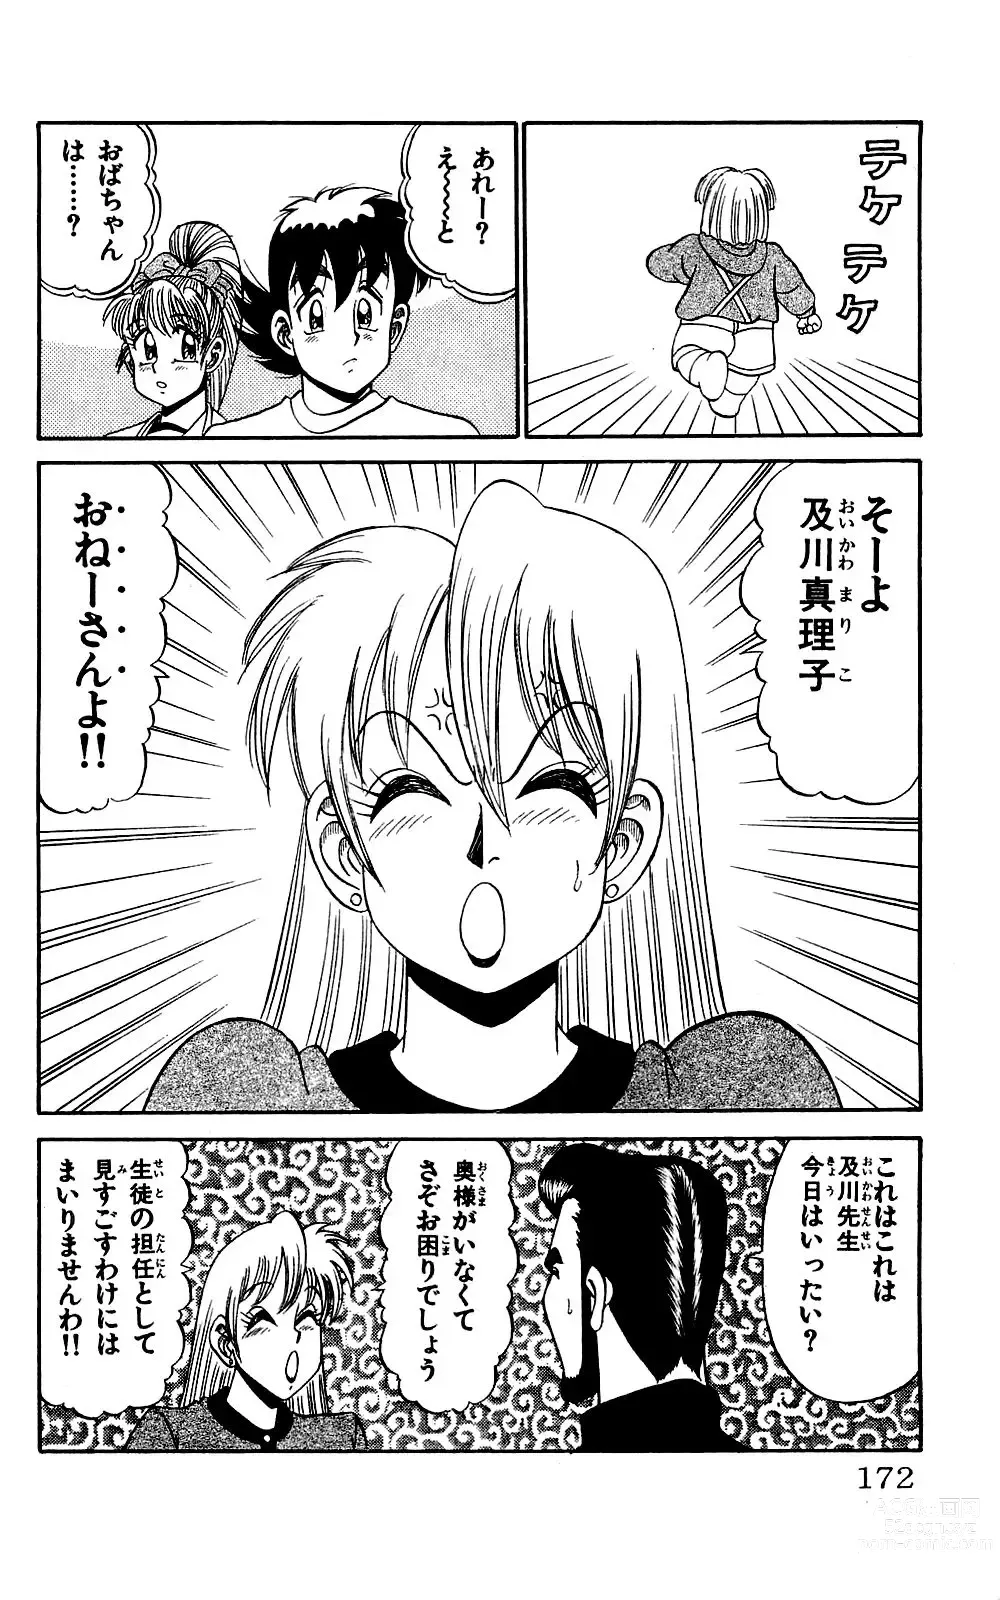 Page 170 of manga Orette Piyoritan Vol. 2